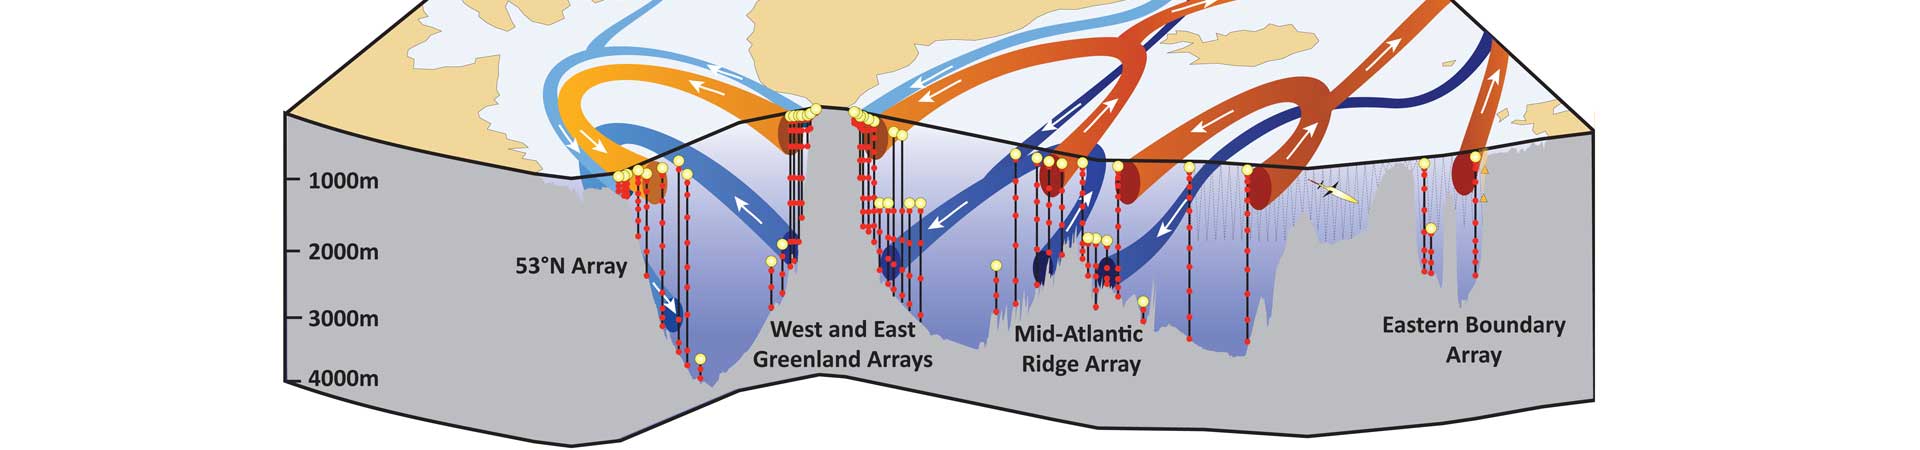 Digramme showing arrangement of oceanographic arrays to measure ocean circulation in the North Atlantic